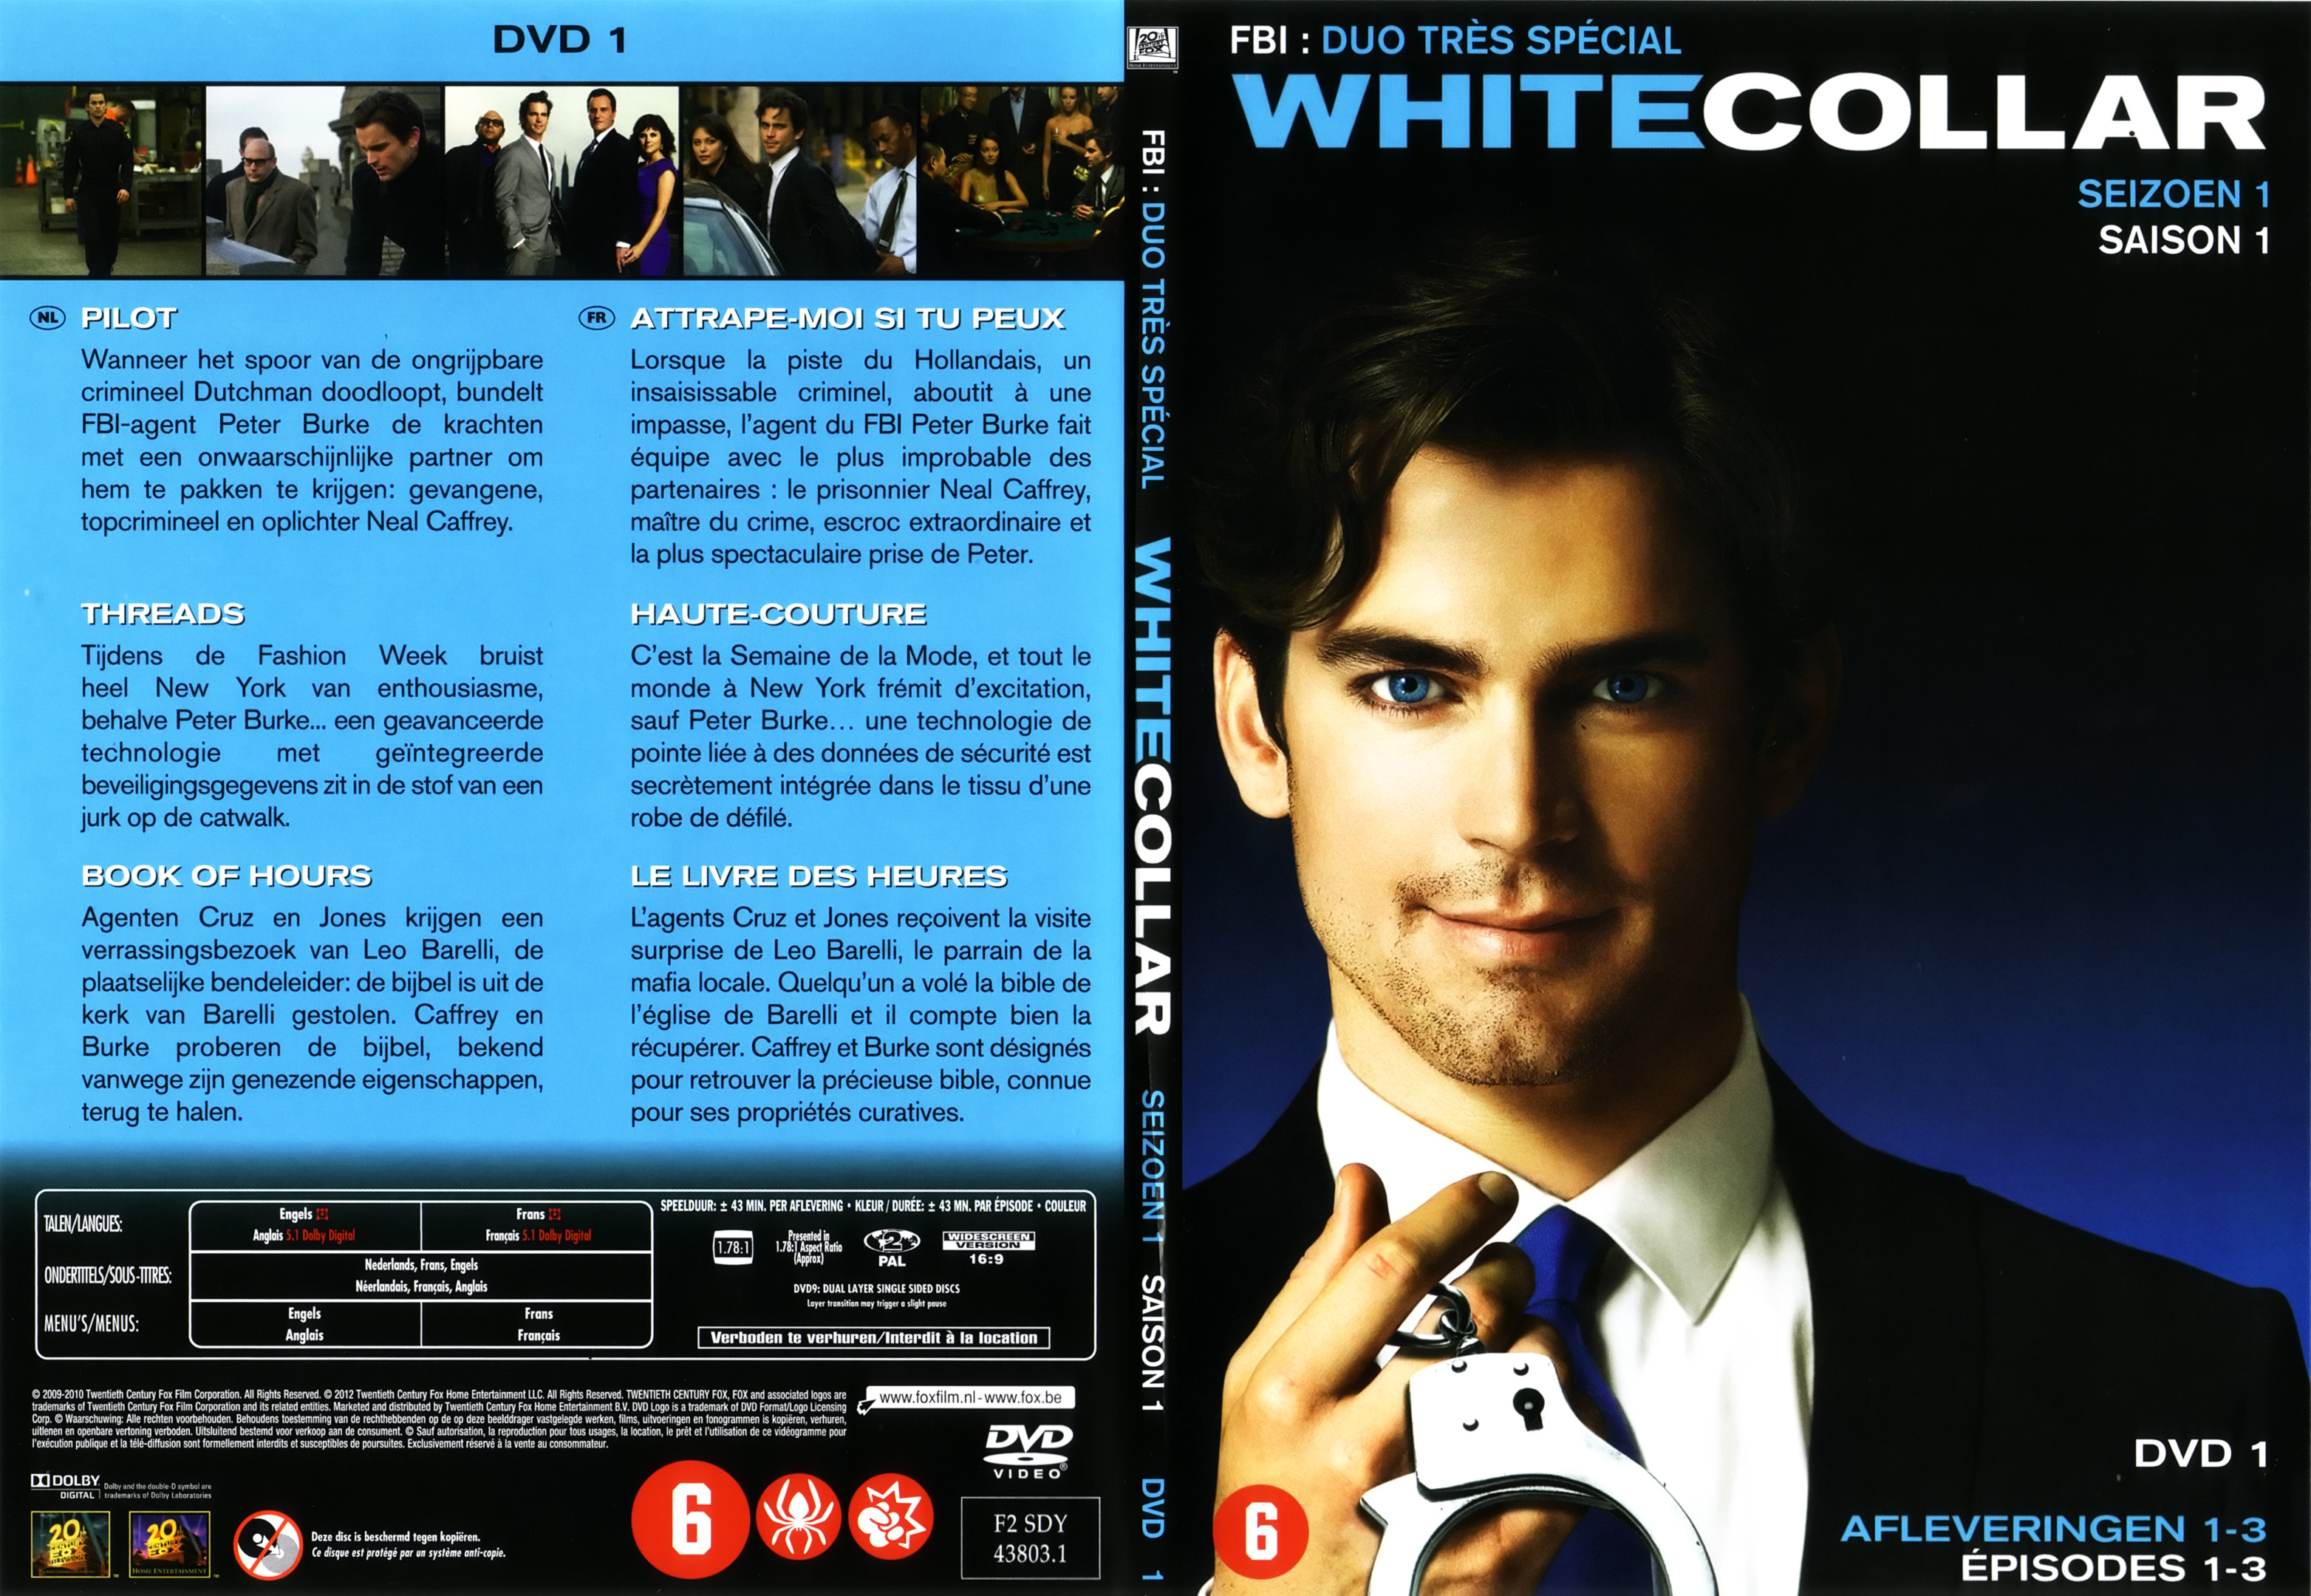 Jaquette DVD White collar saison 1 DVD 1